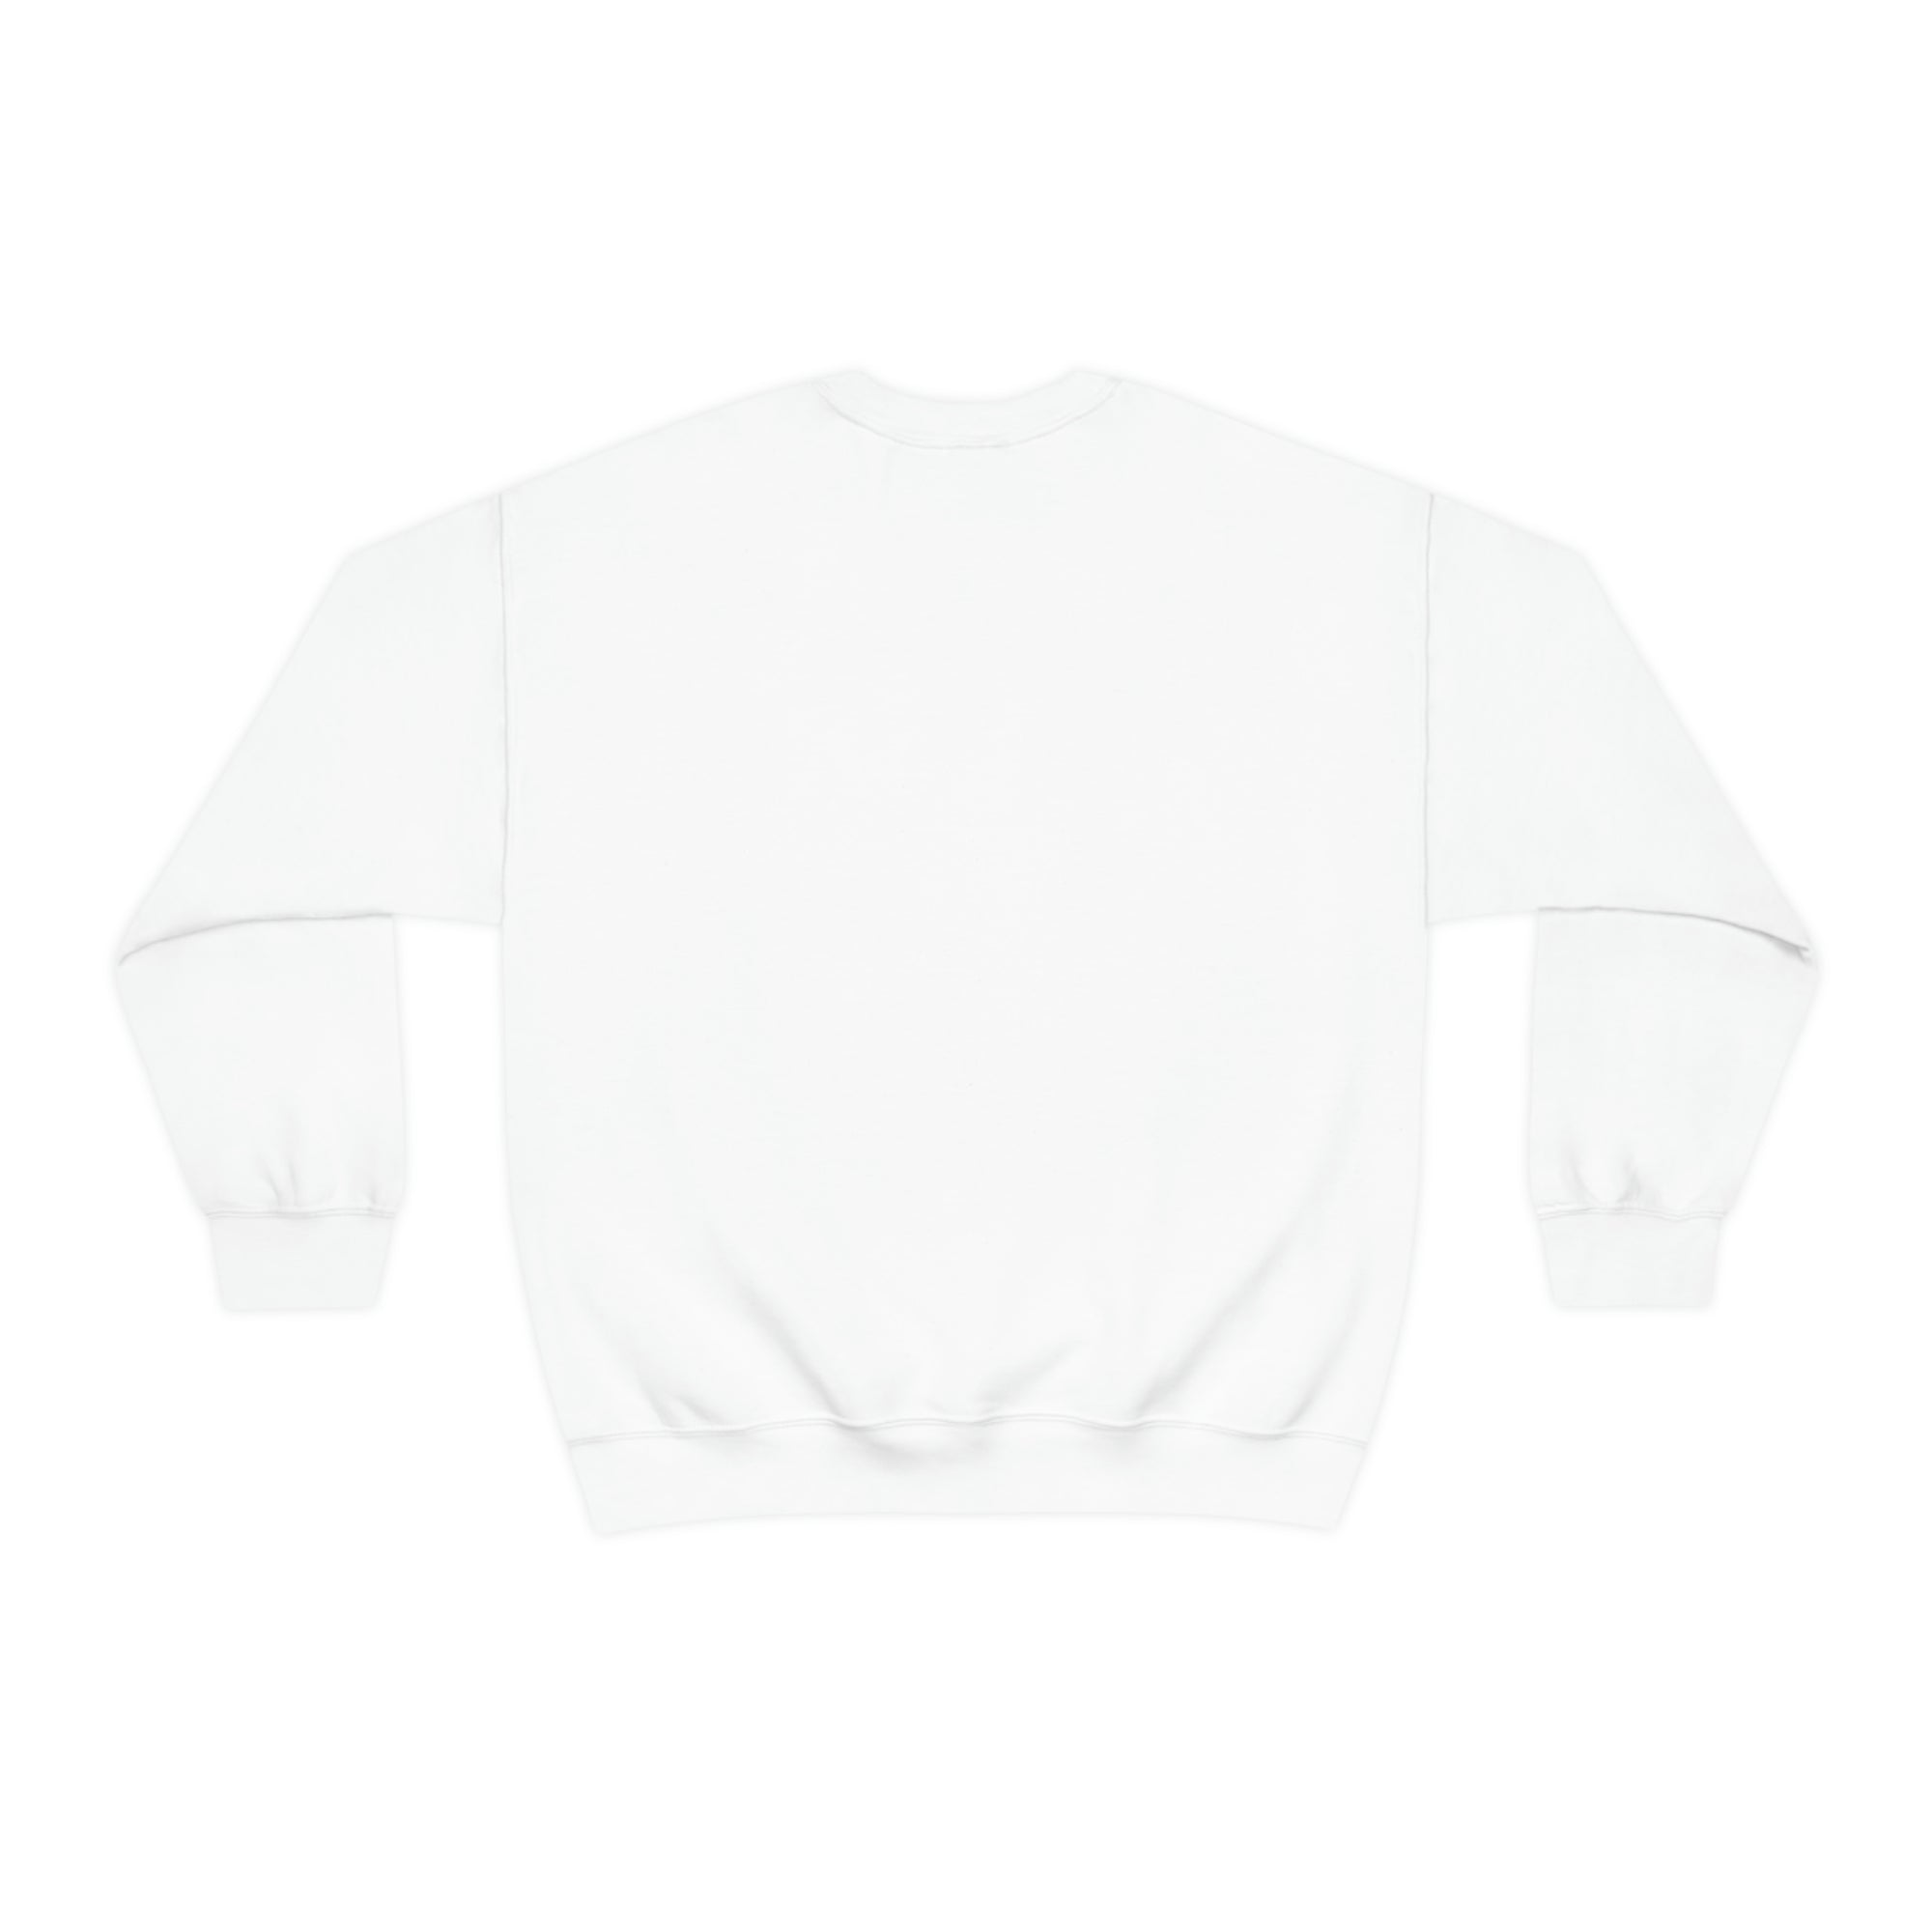 Pjs and Paint® Unisex Heavy Blend™ Crewneck Sweatshirt